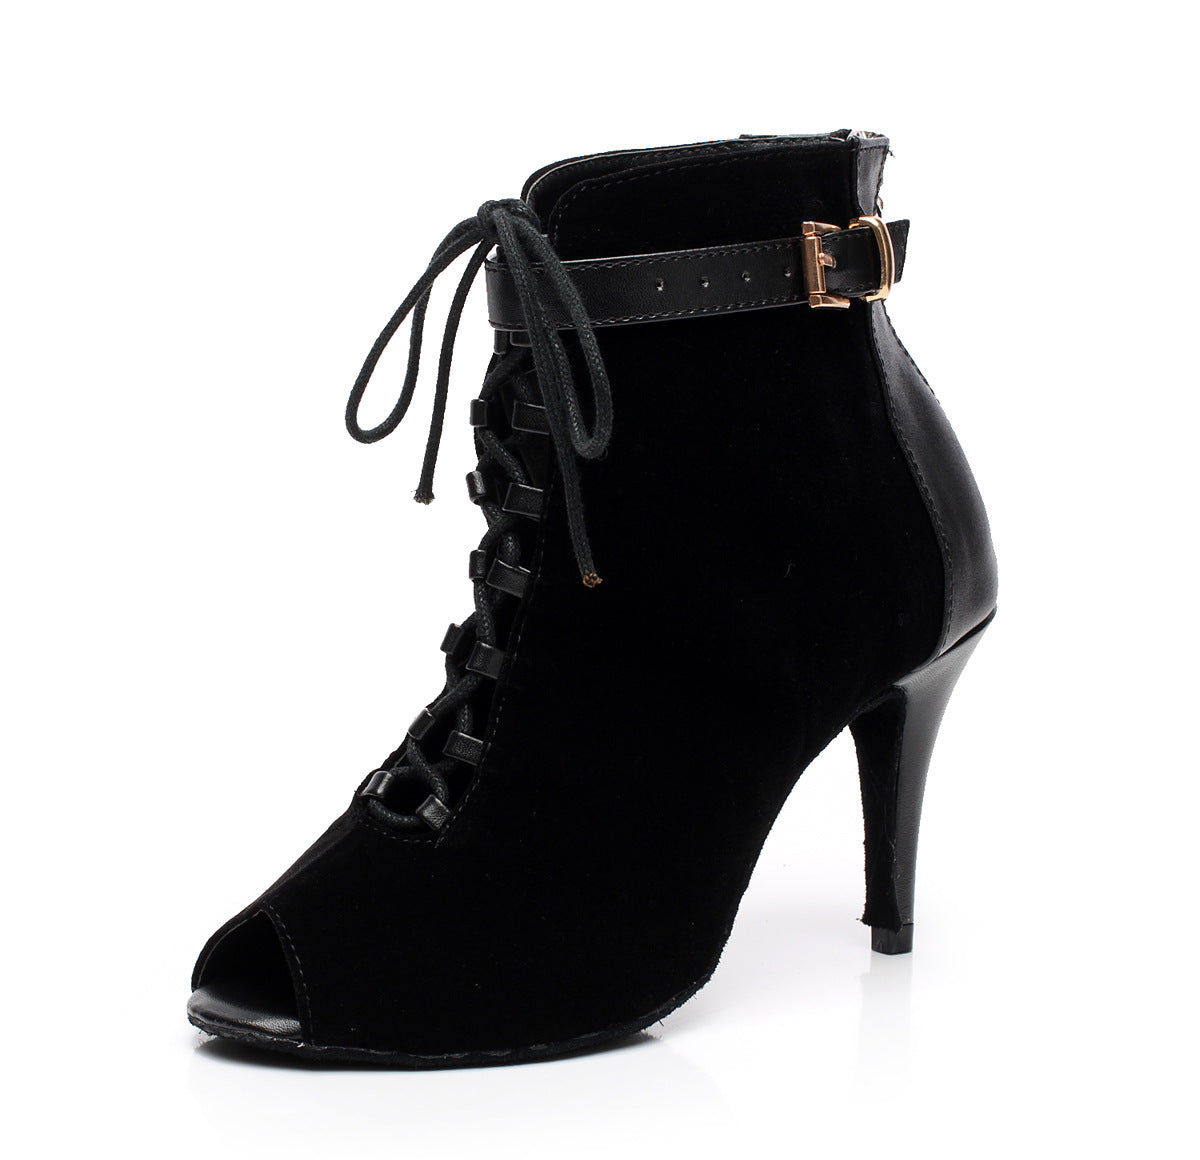 black suede and leather peep toe heels